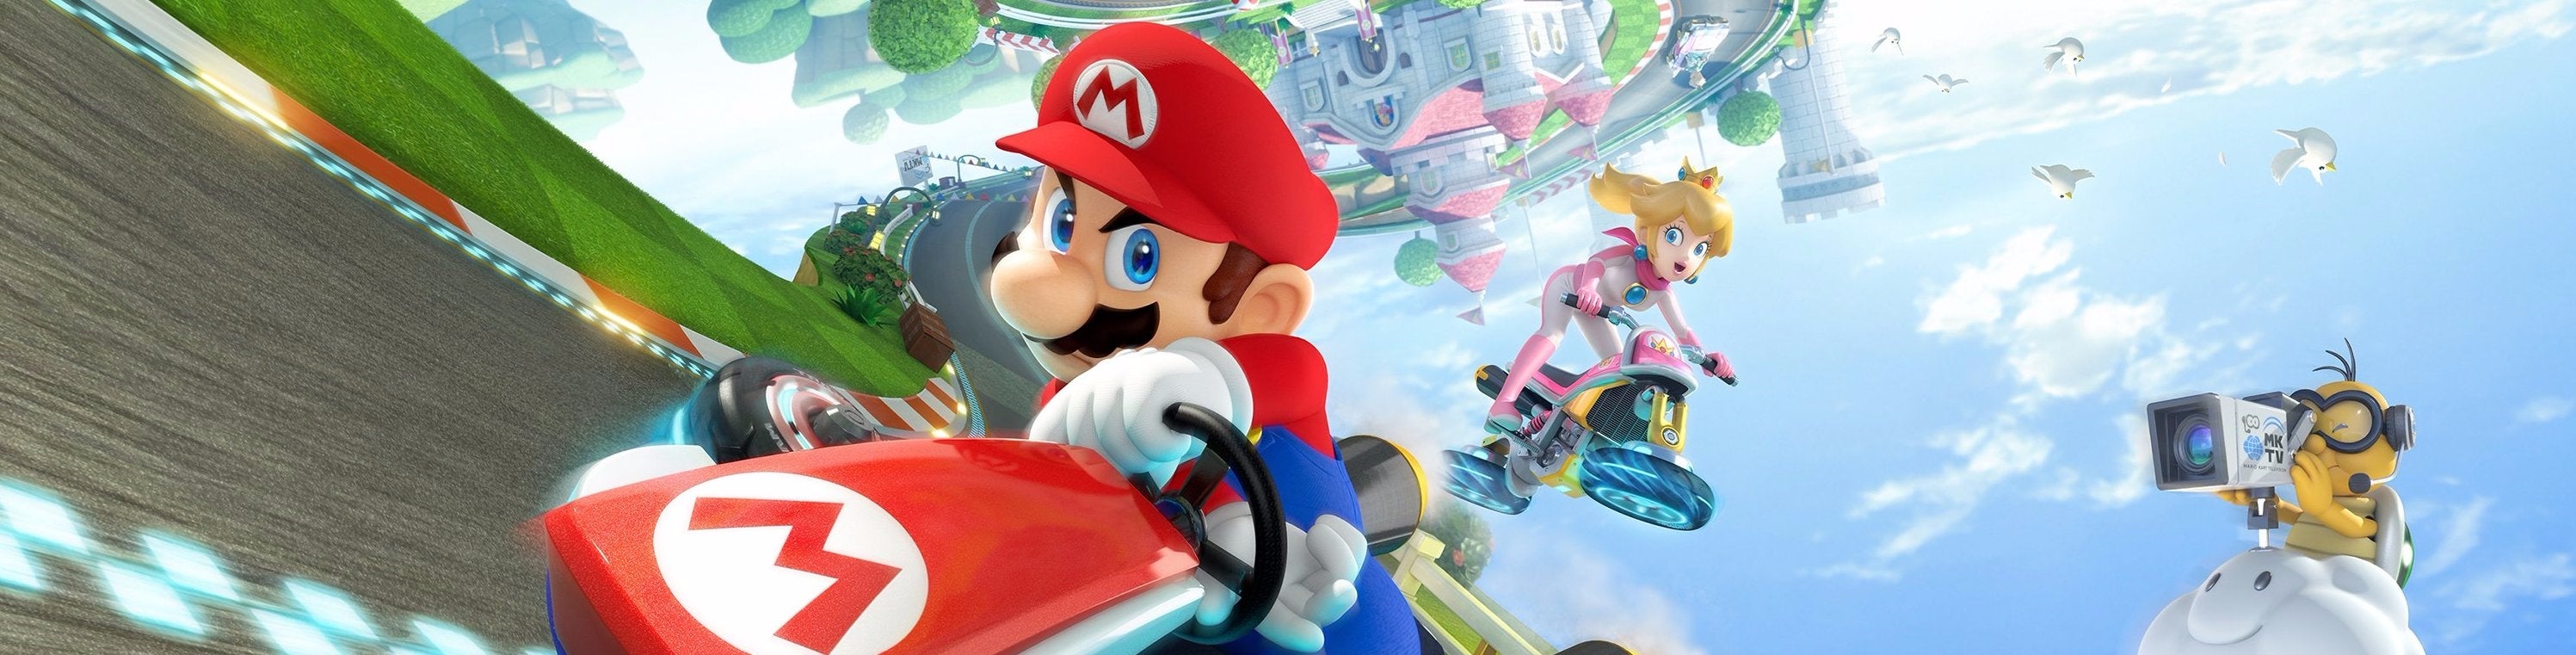 Imagen para Pequeños detalles: Mario Kart